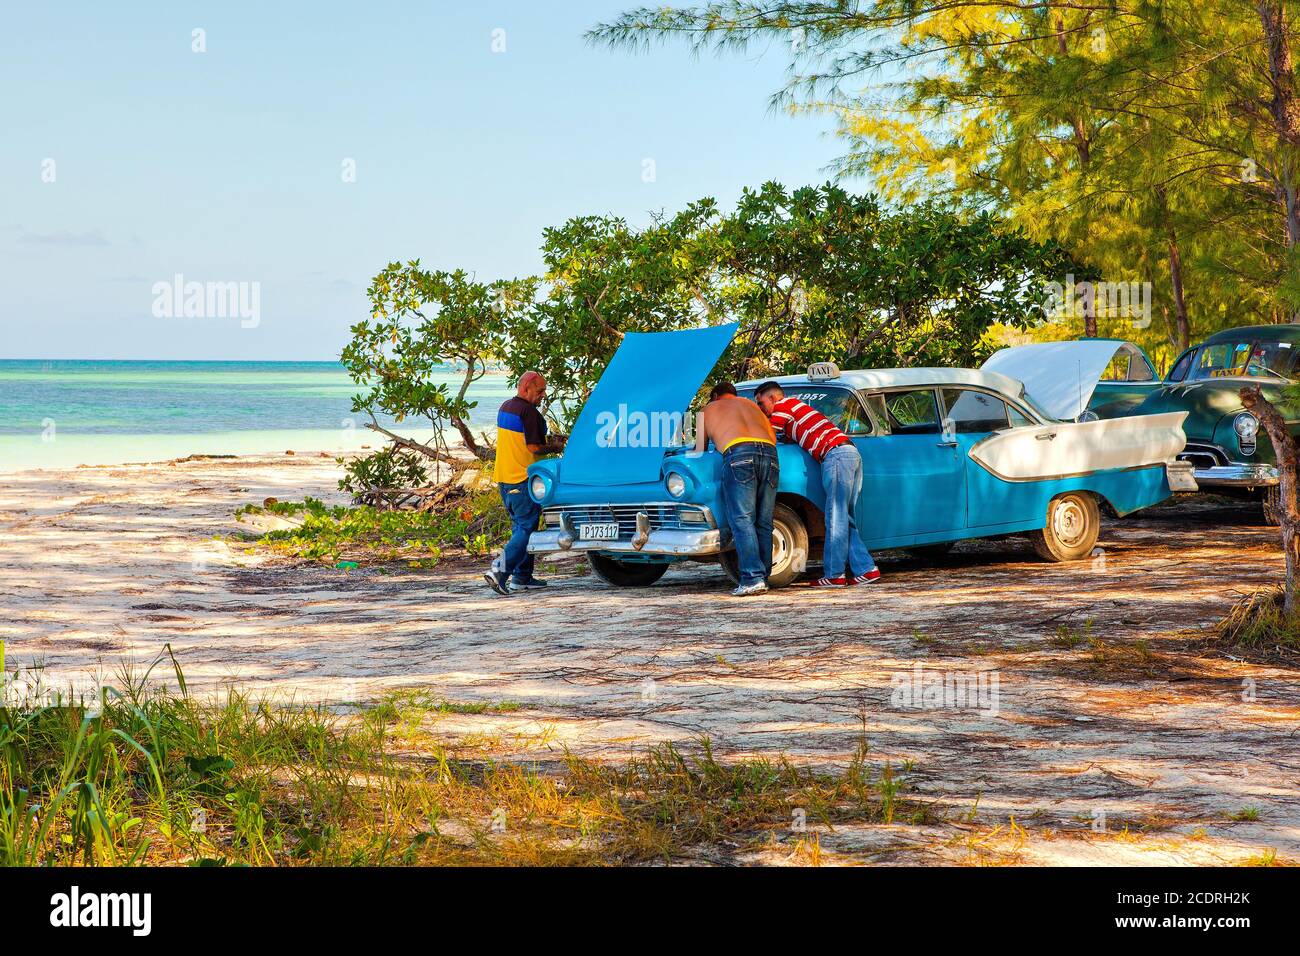 Cayo Jutias, Cuba: Cubans repair an old classic American vintage taxi car Stock Photo